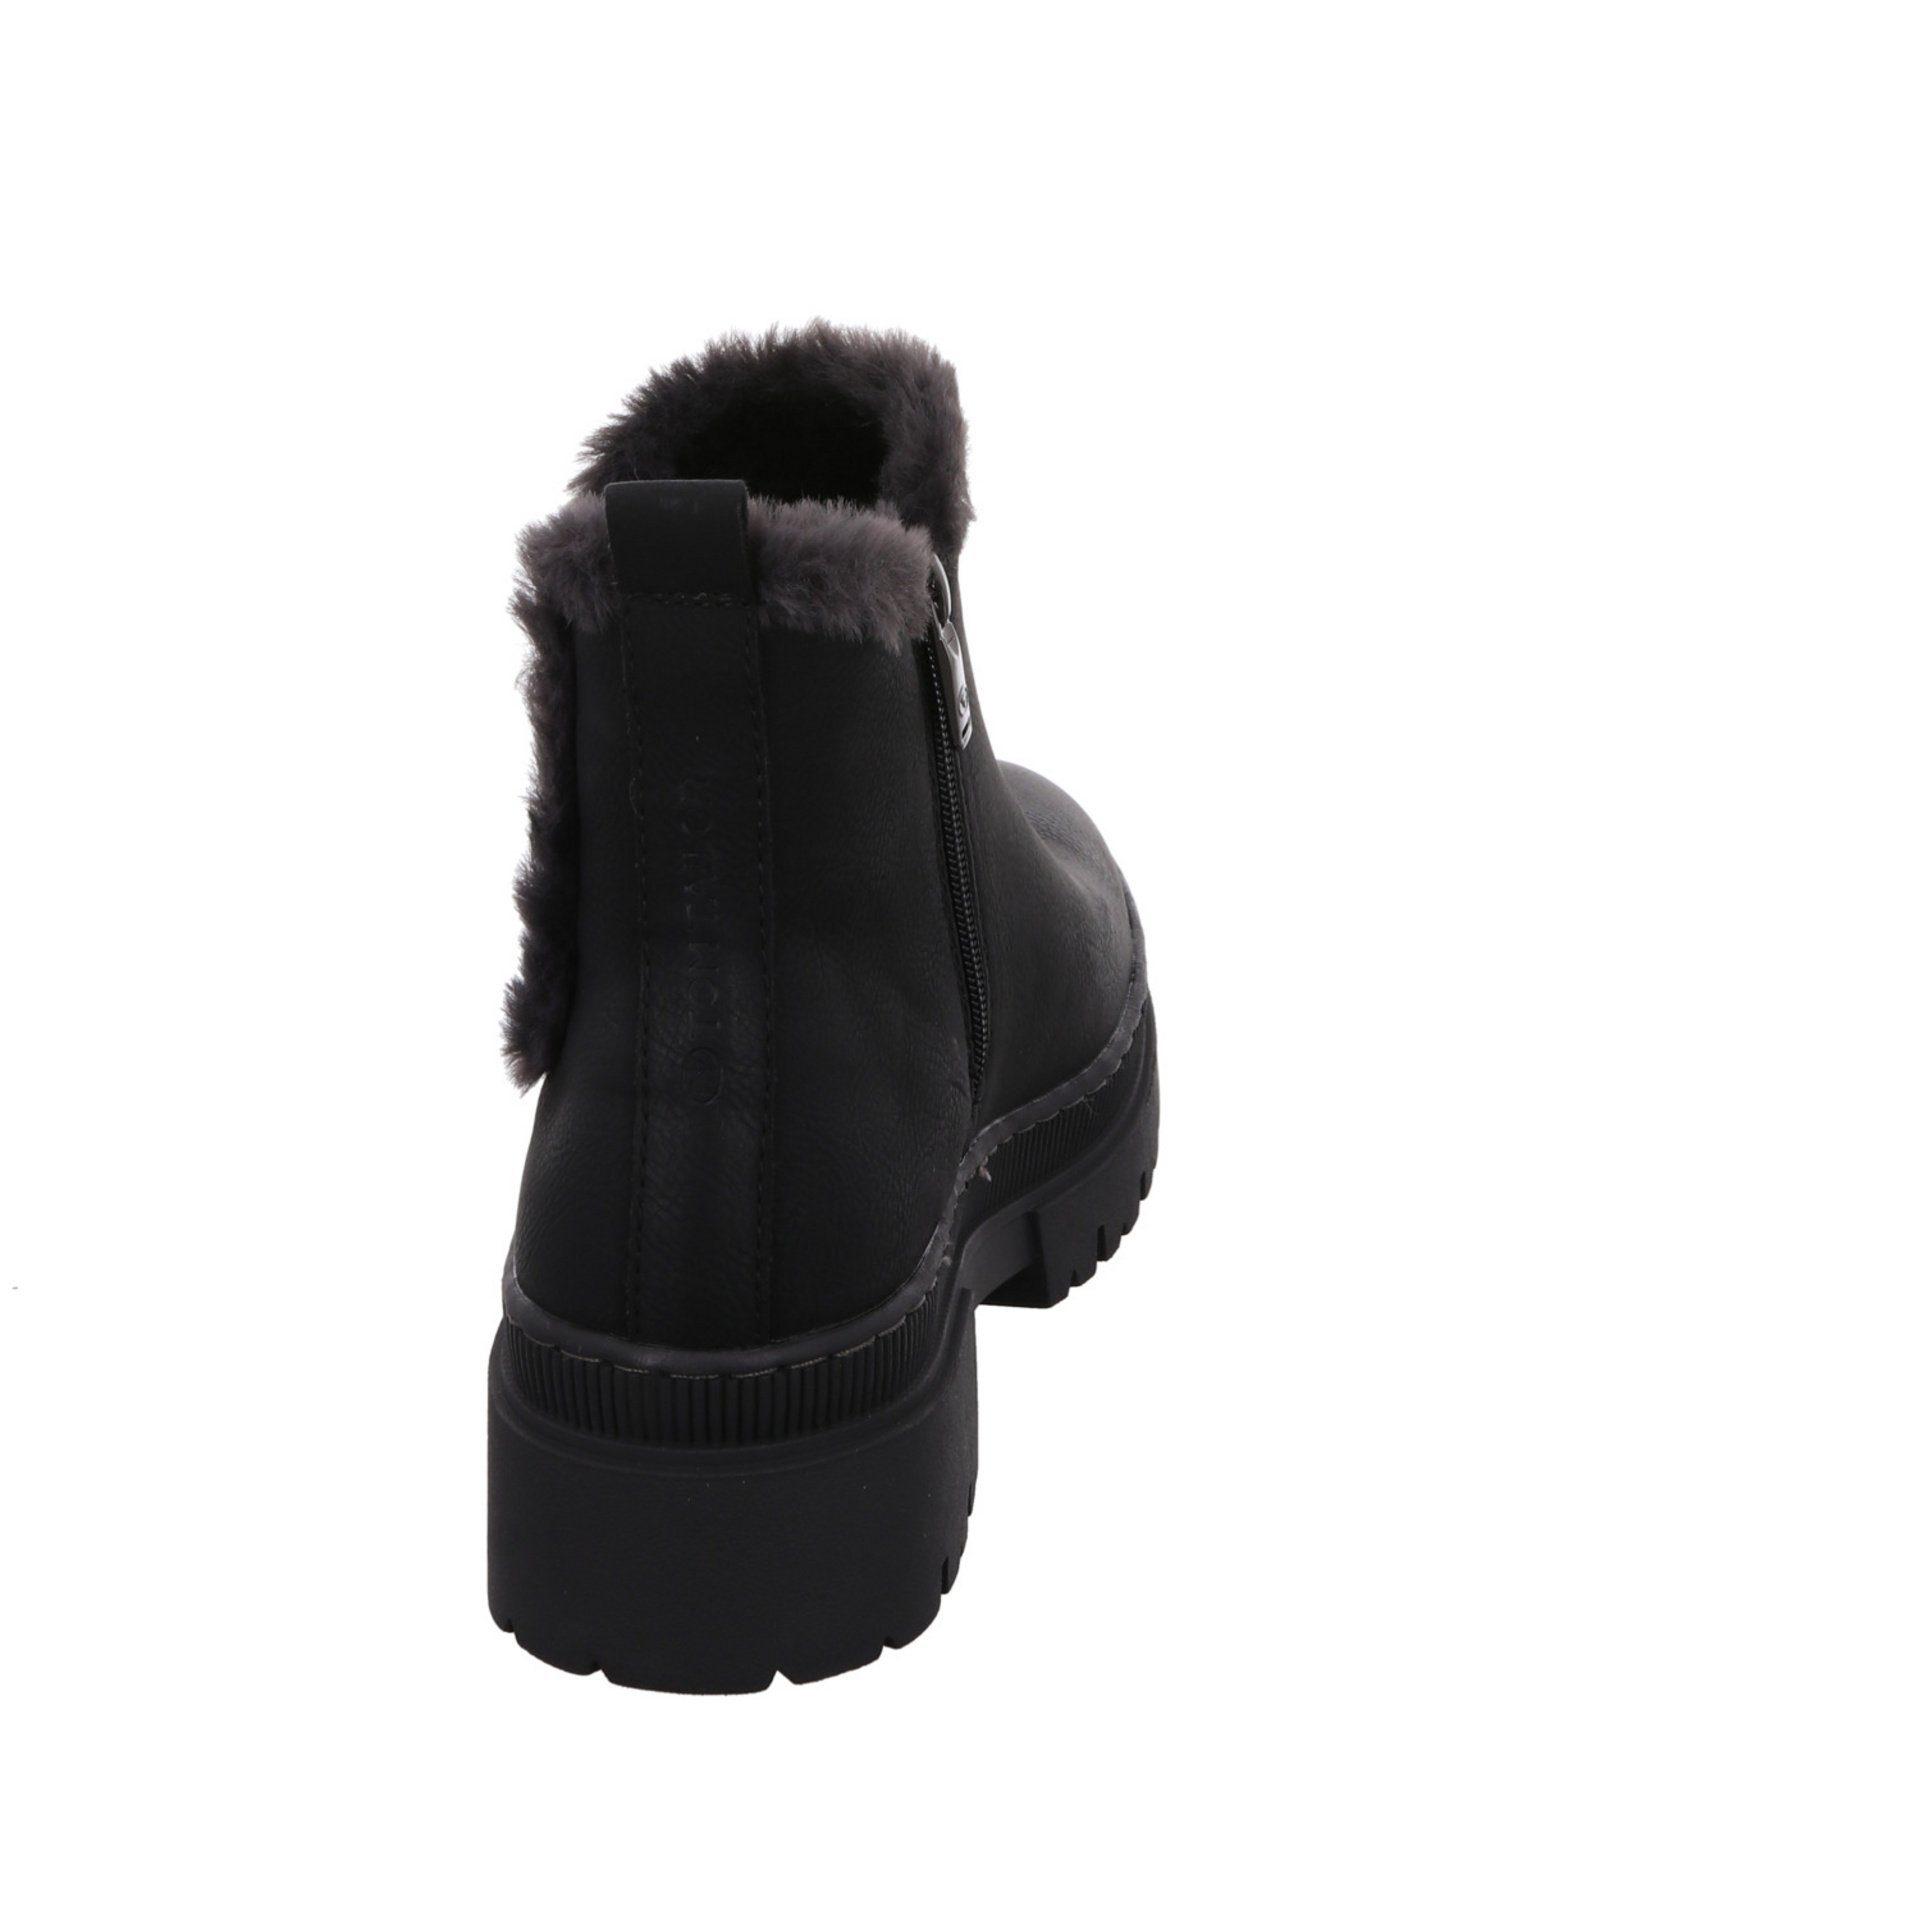 Synthetik Stiefel black Stiefel Chelsea Schuhe TAILOR Damen TOM Boots